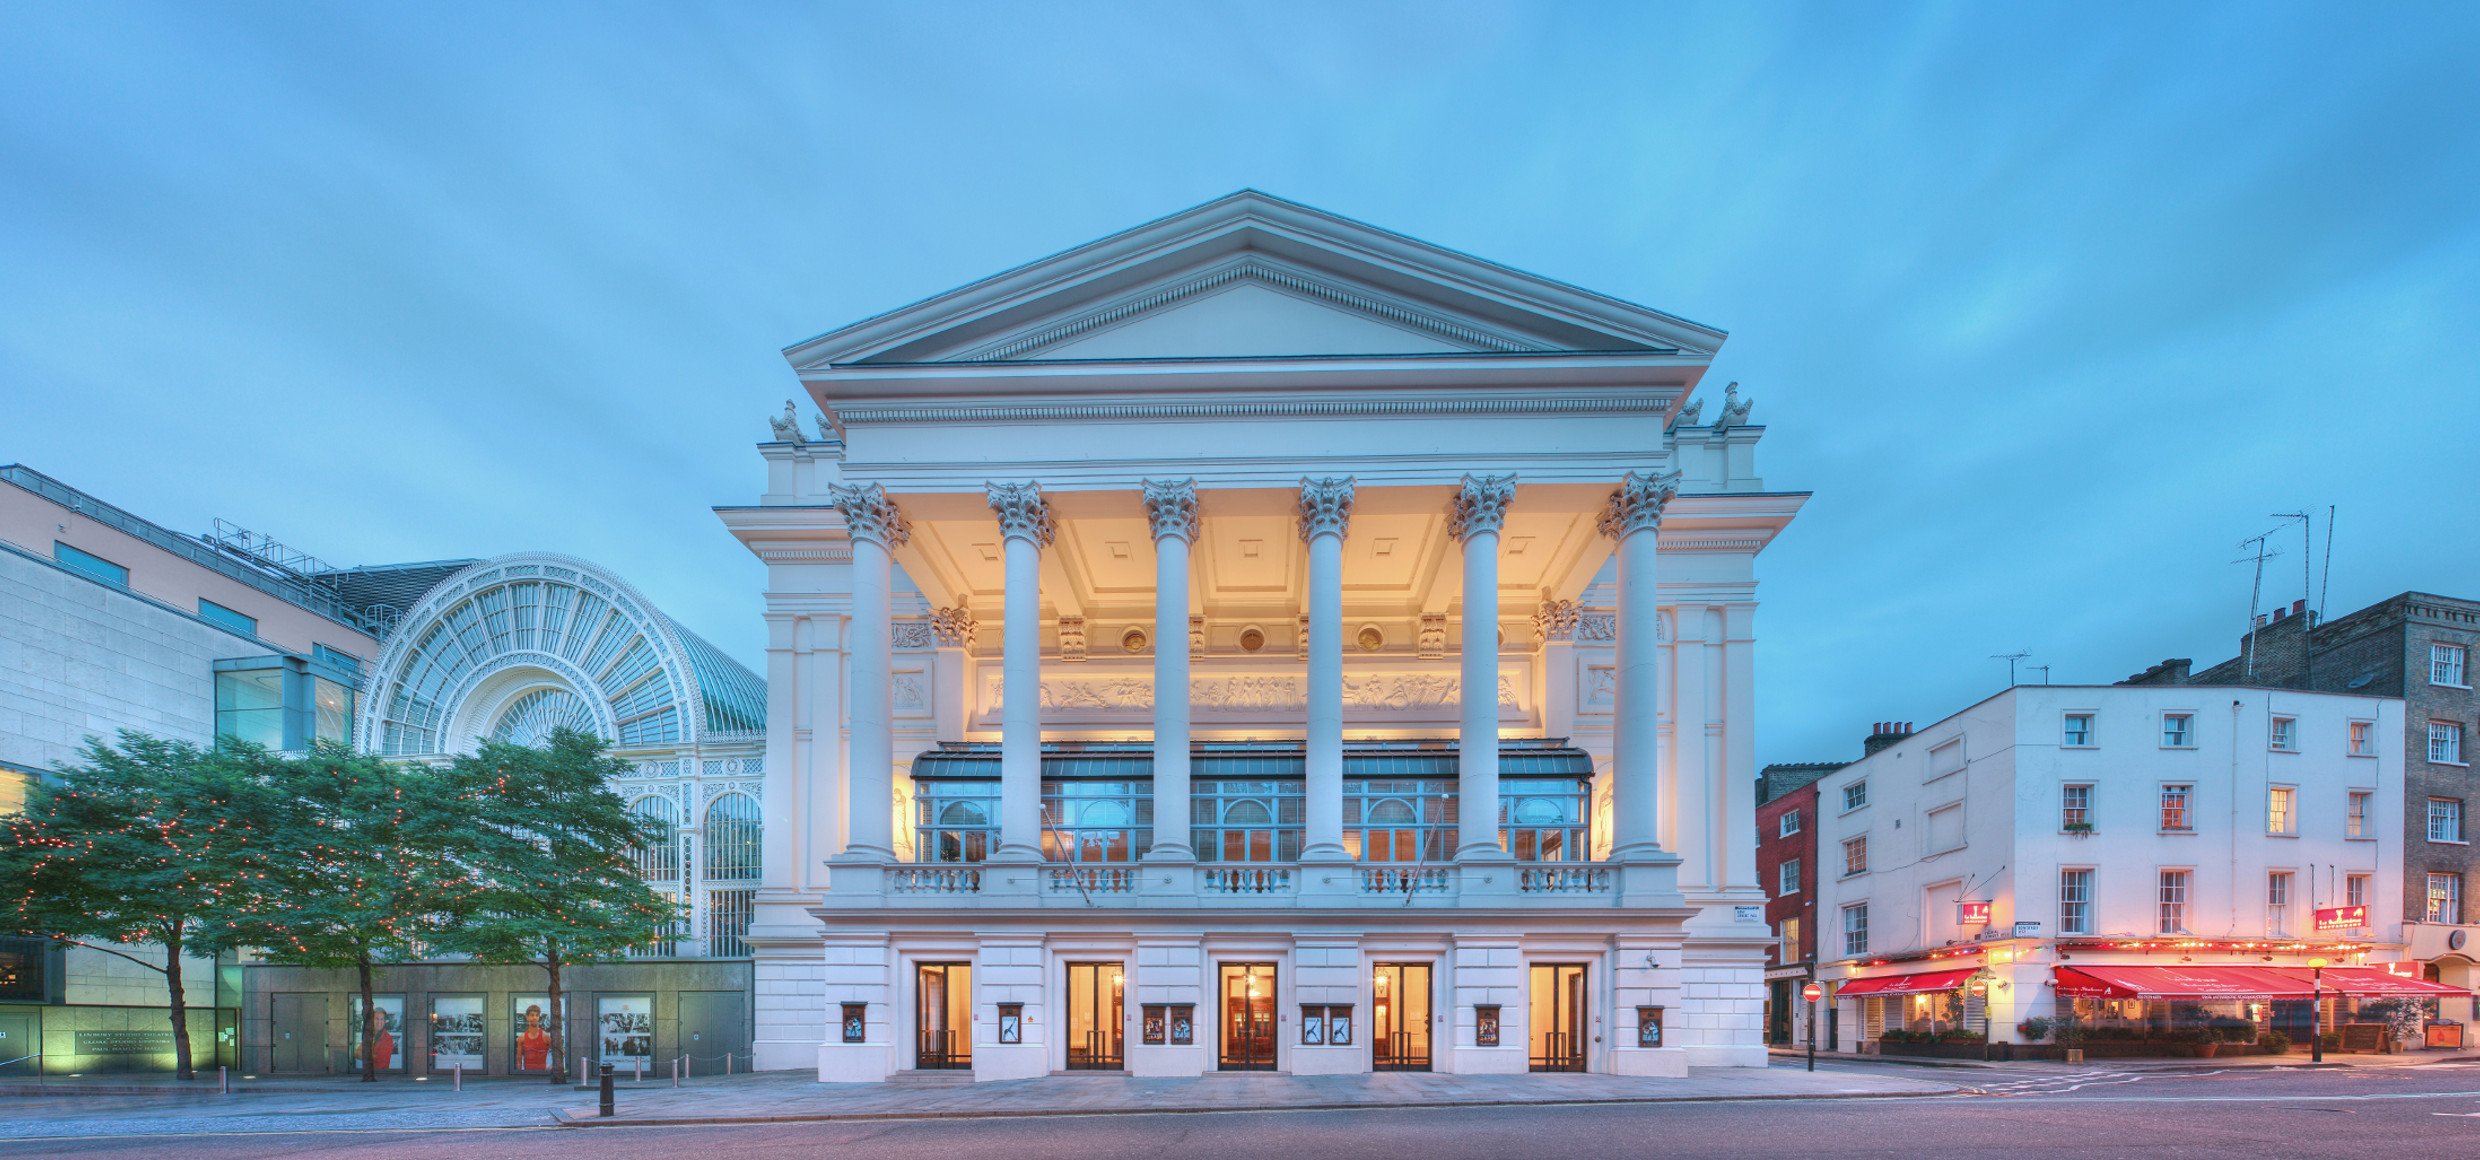 The Royal Opera House London - ZEIT REISEN